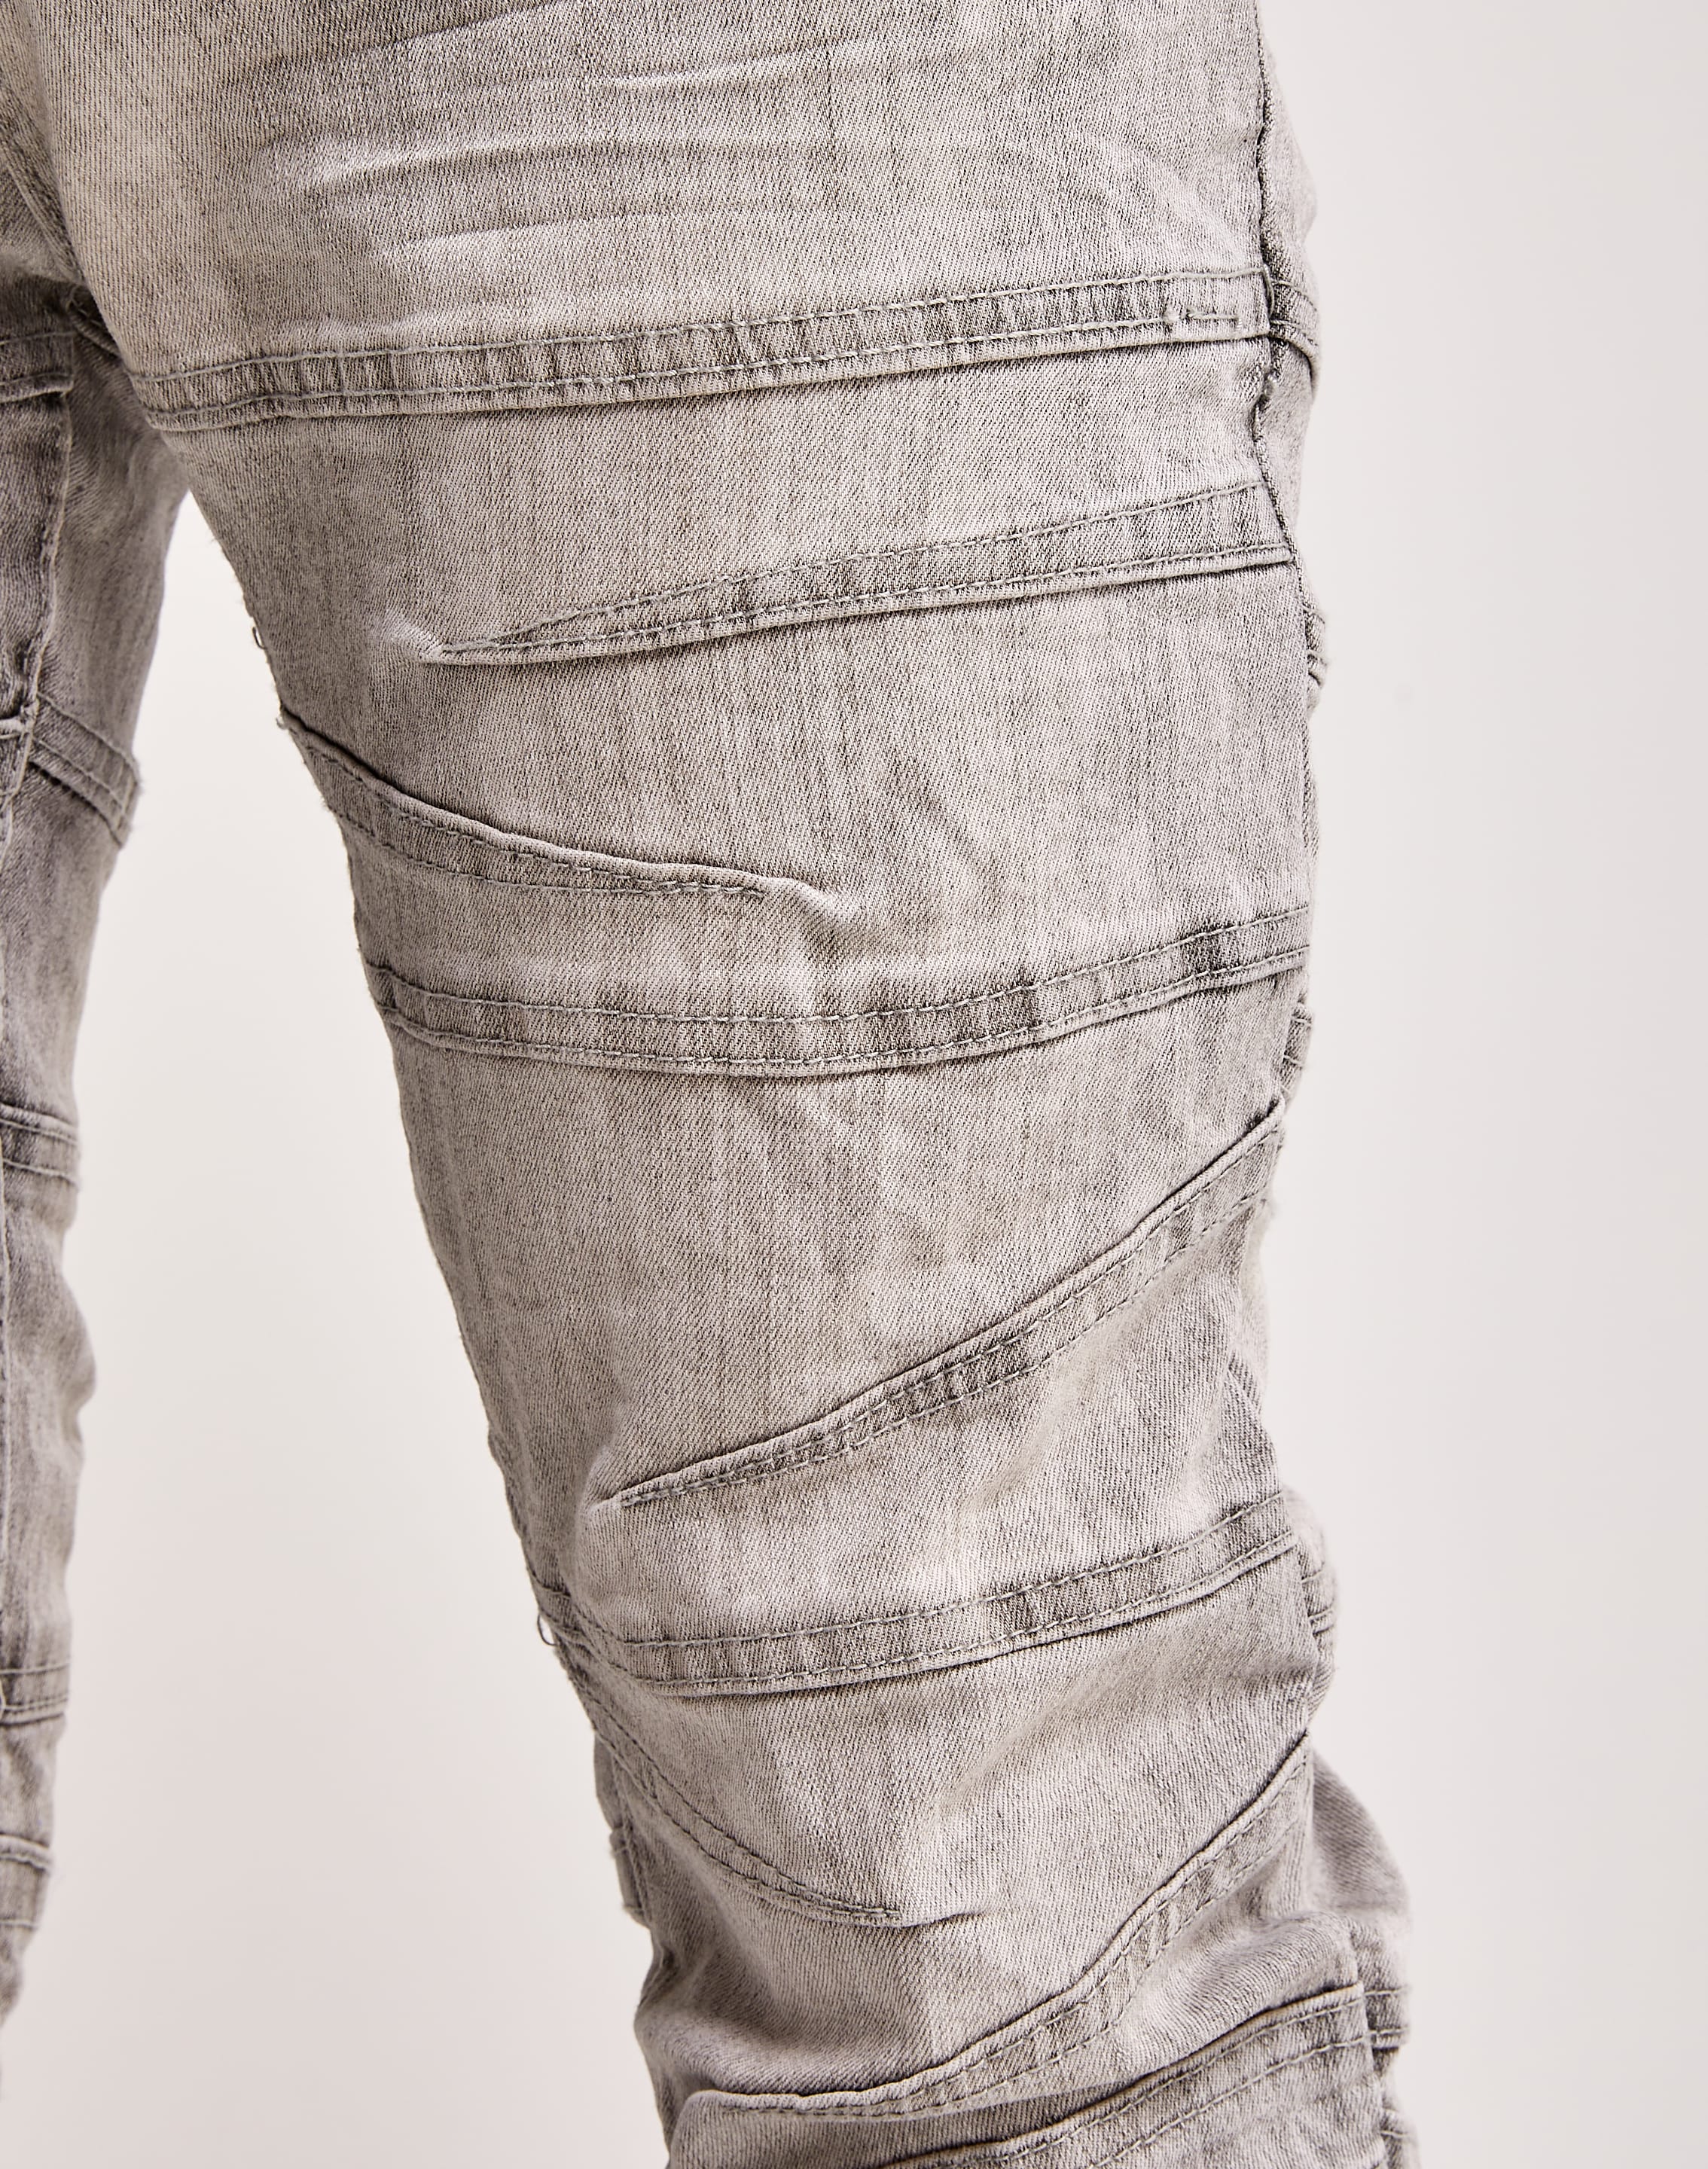 Buy Stacked Denim Jeans for Men